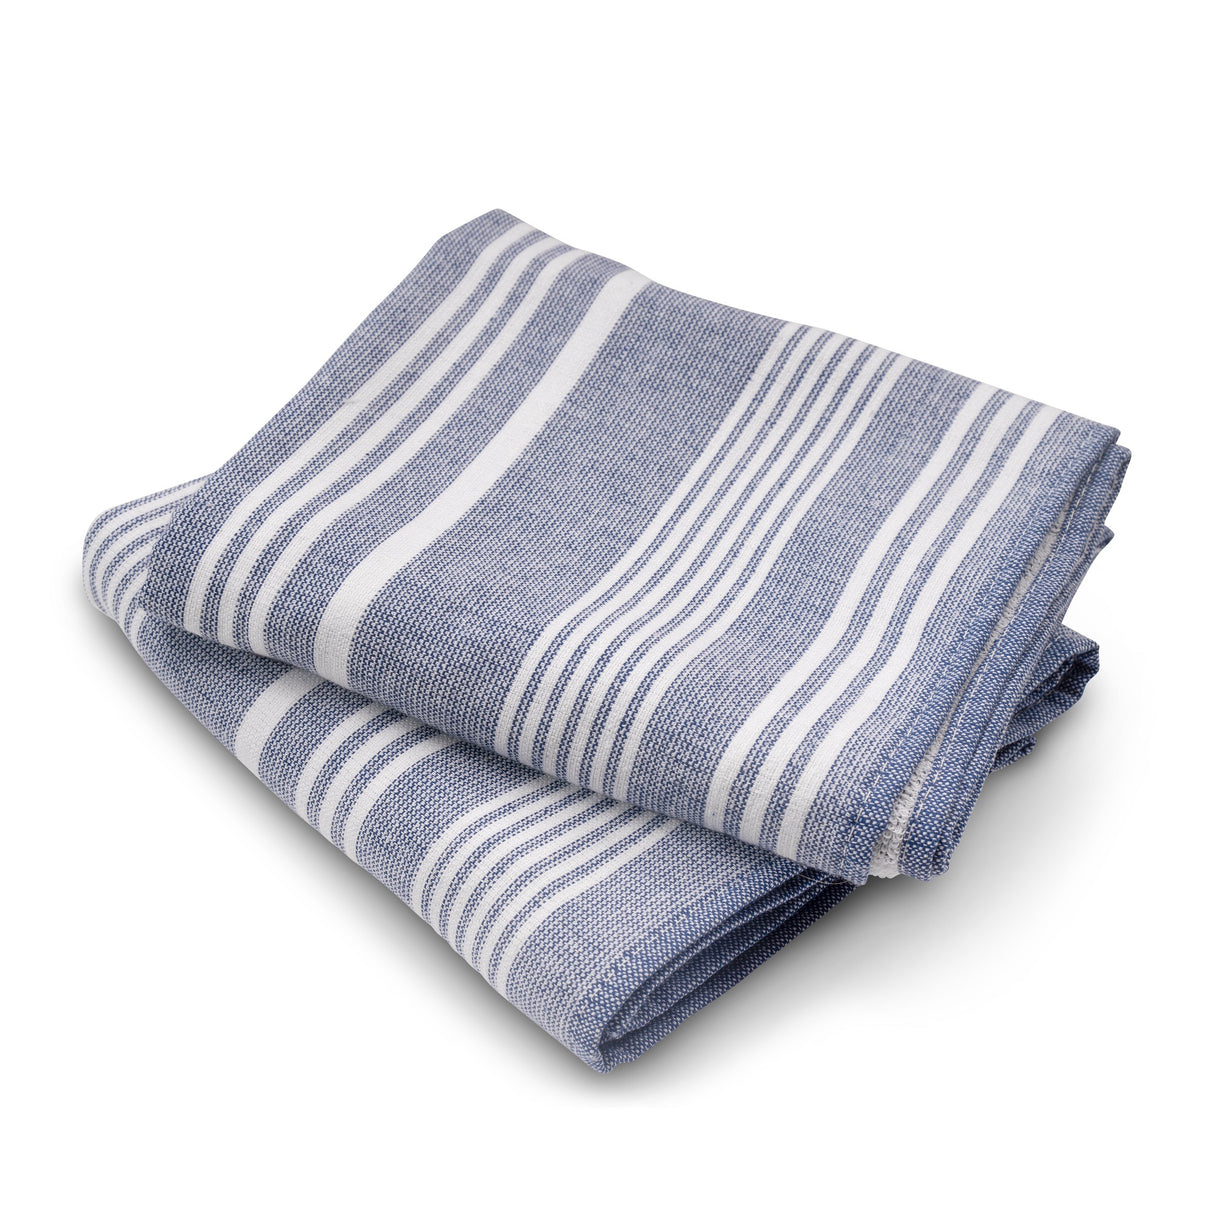 Cuisinart Fouta Tea Towels, 2 Piece Set, Blue Stripes